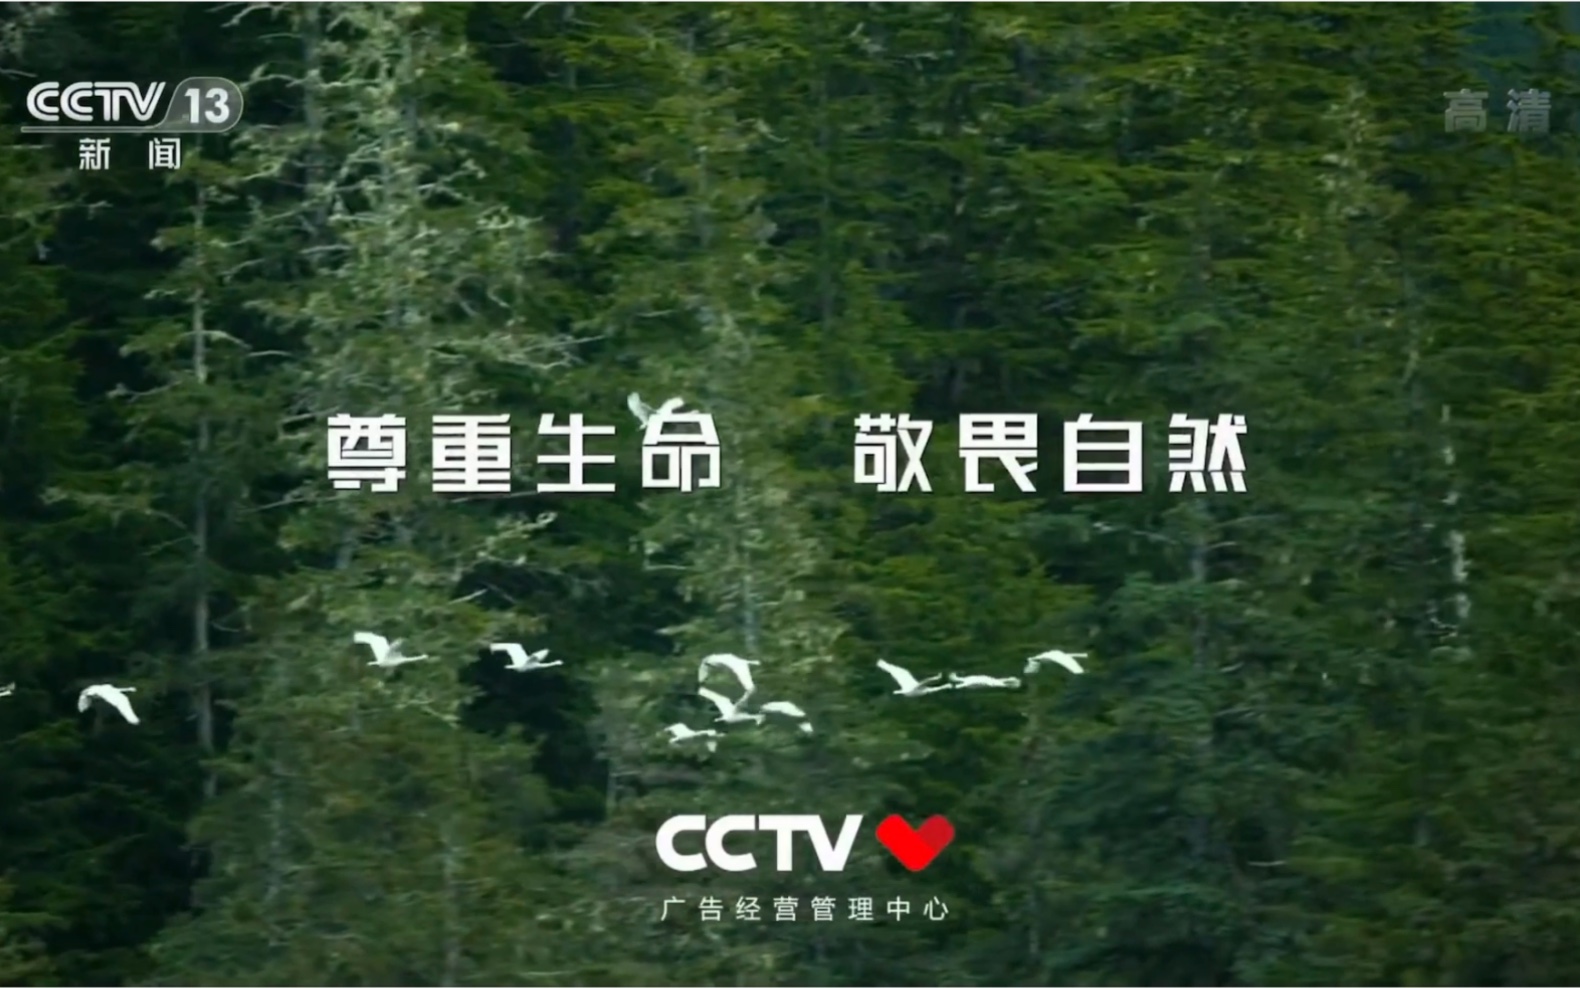 cctv12公益广告图片